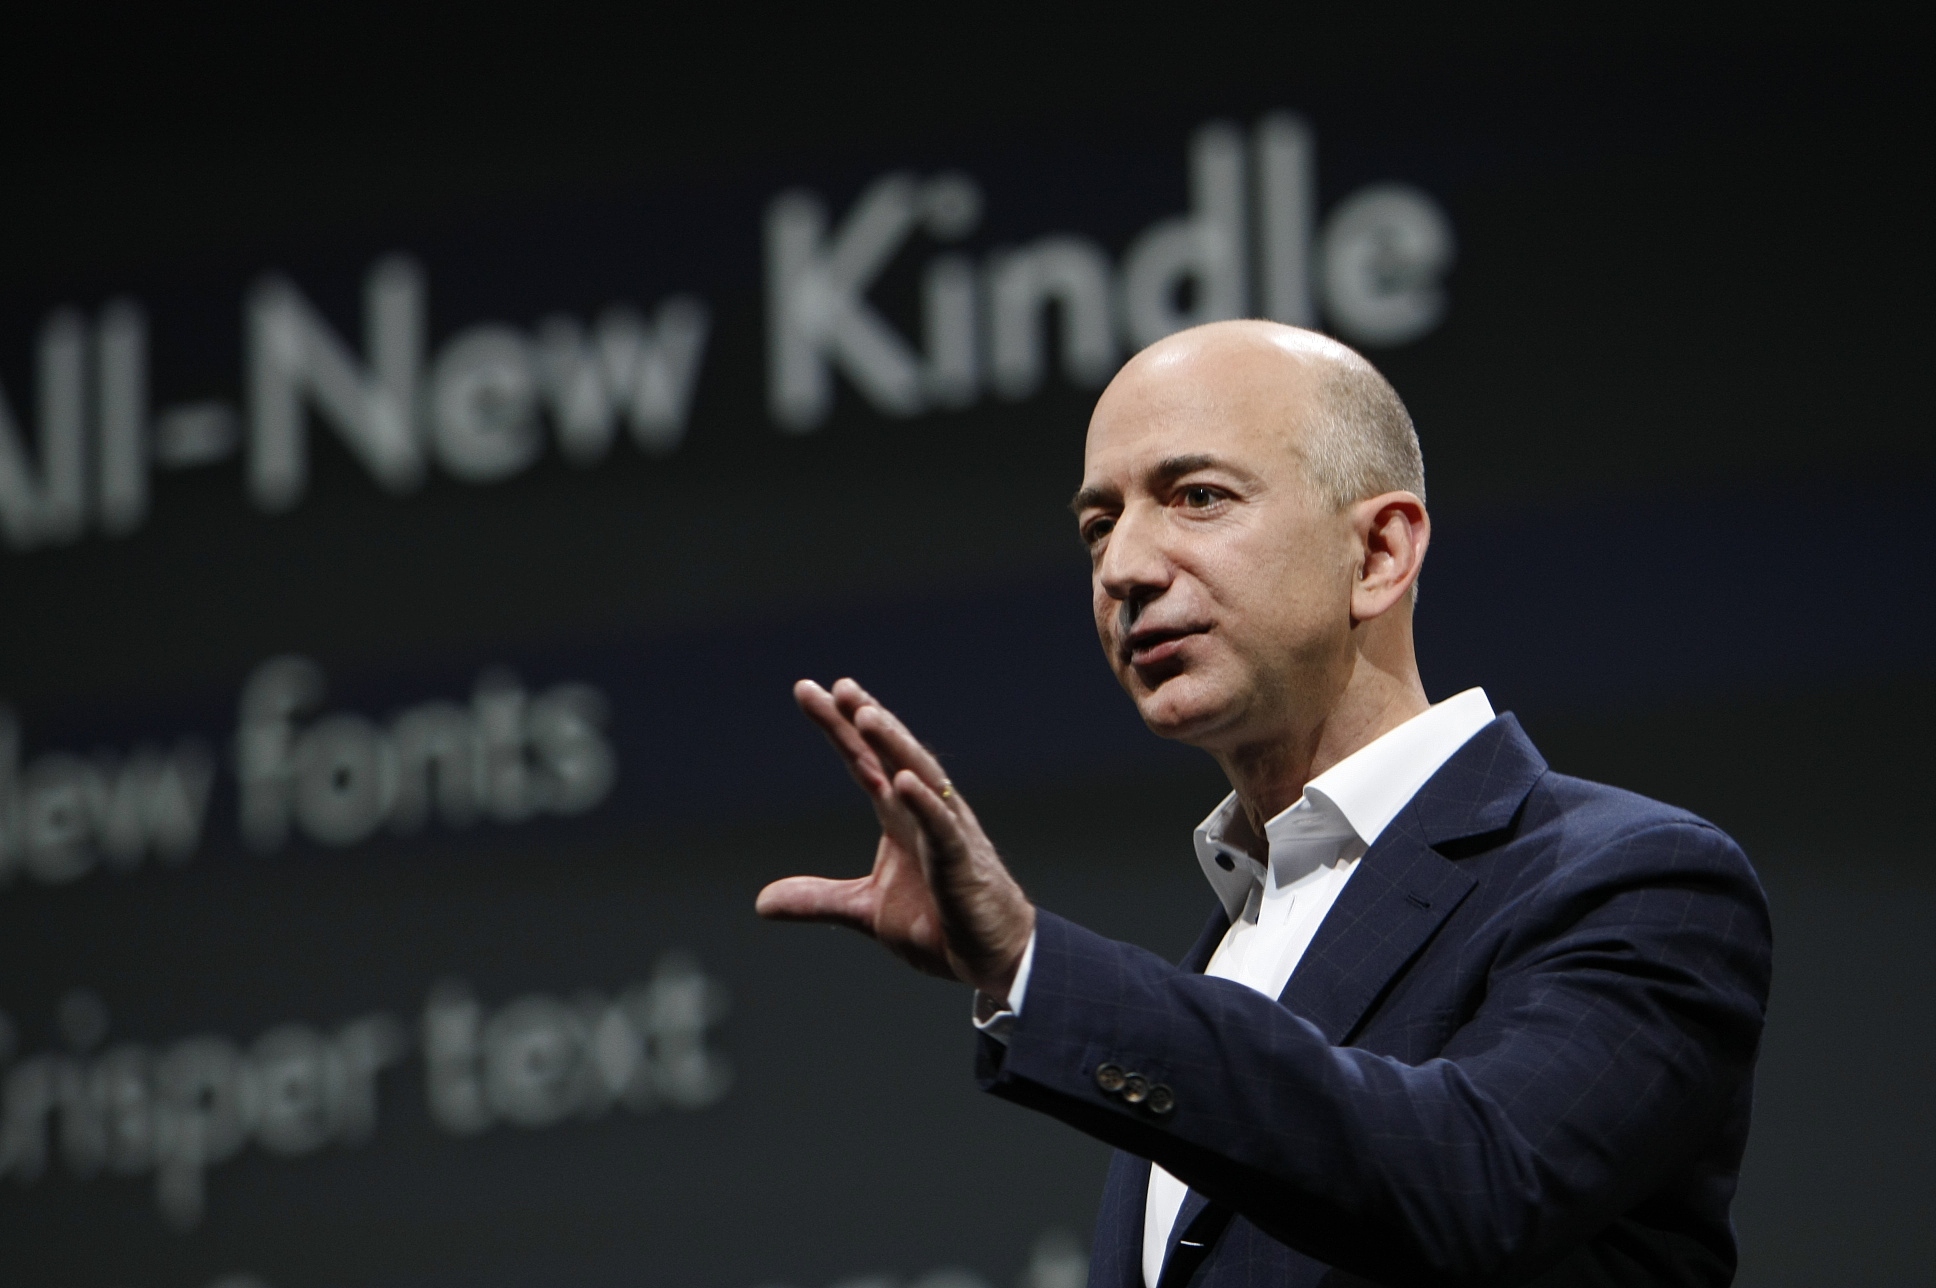  $210 billion, Amazon founder Jeff Bezos returns to the world's richest man